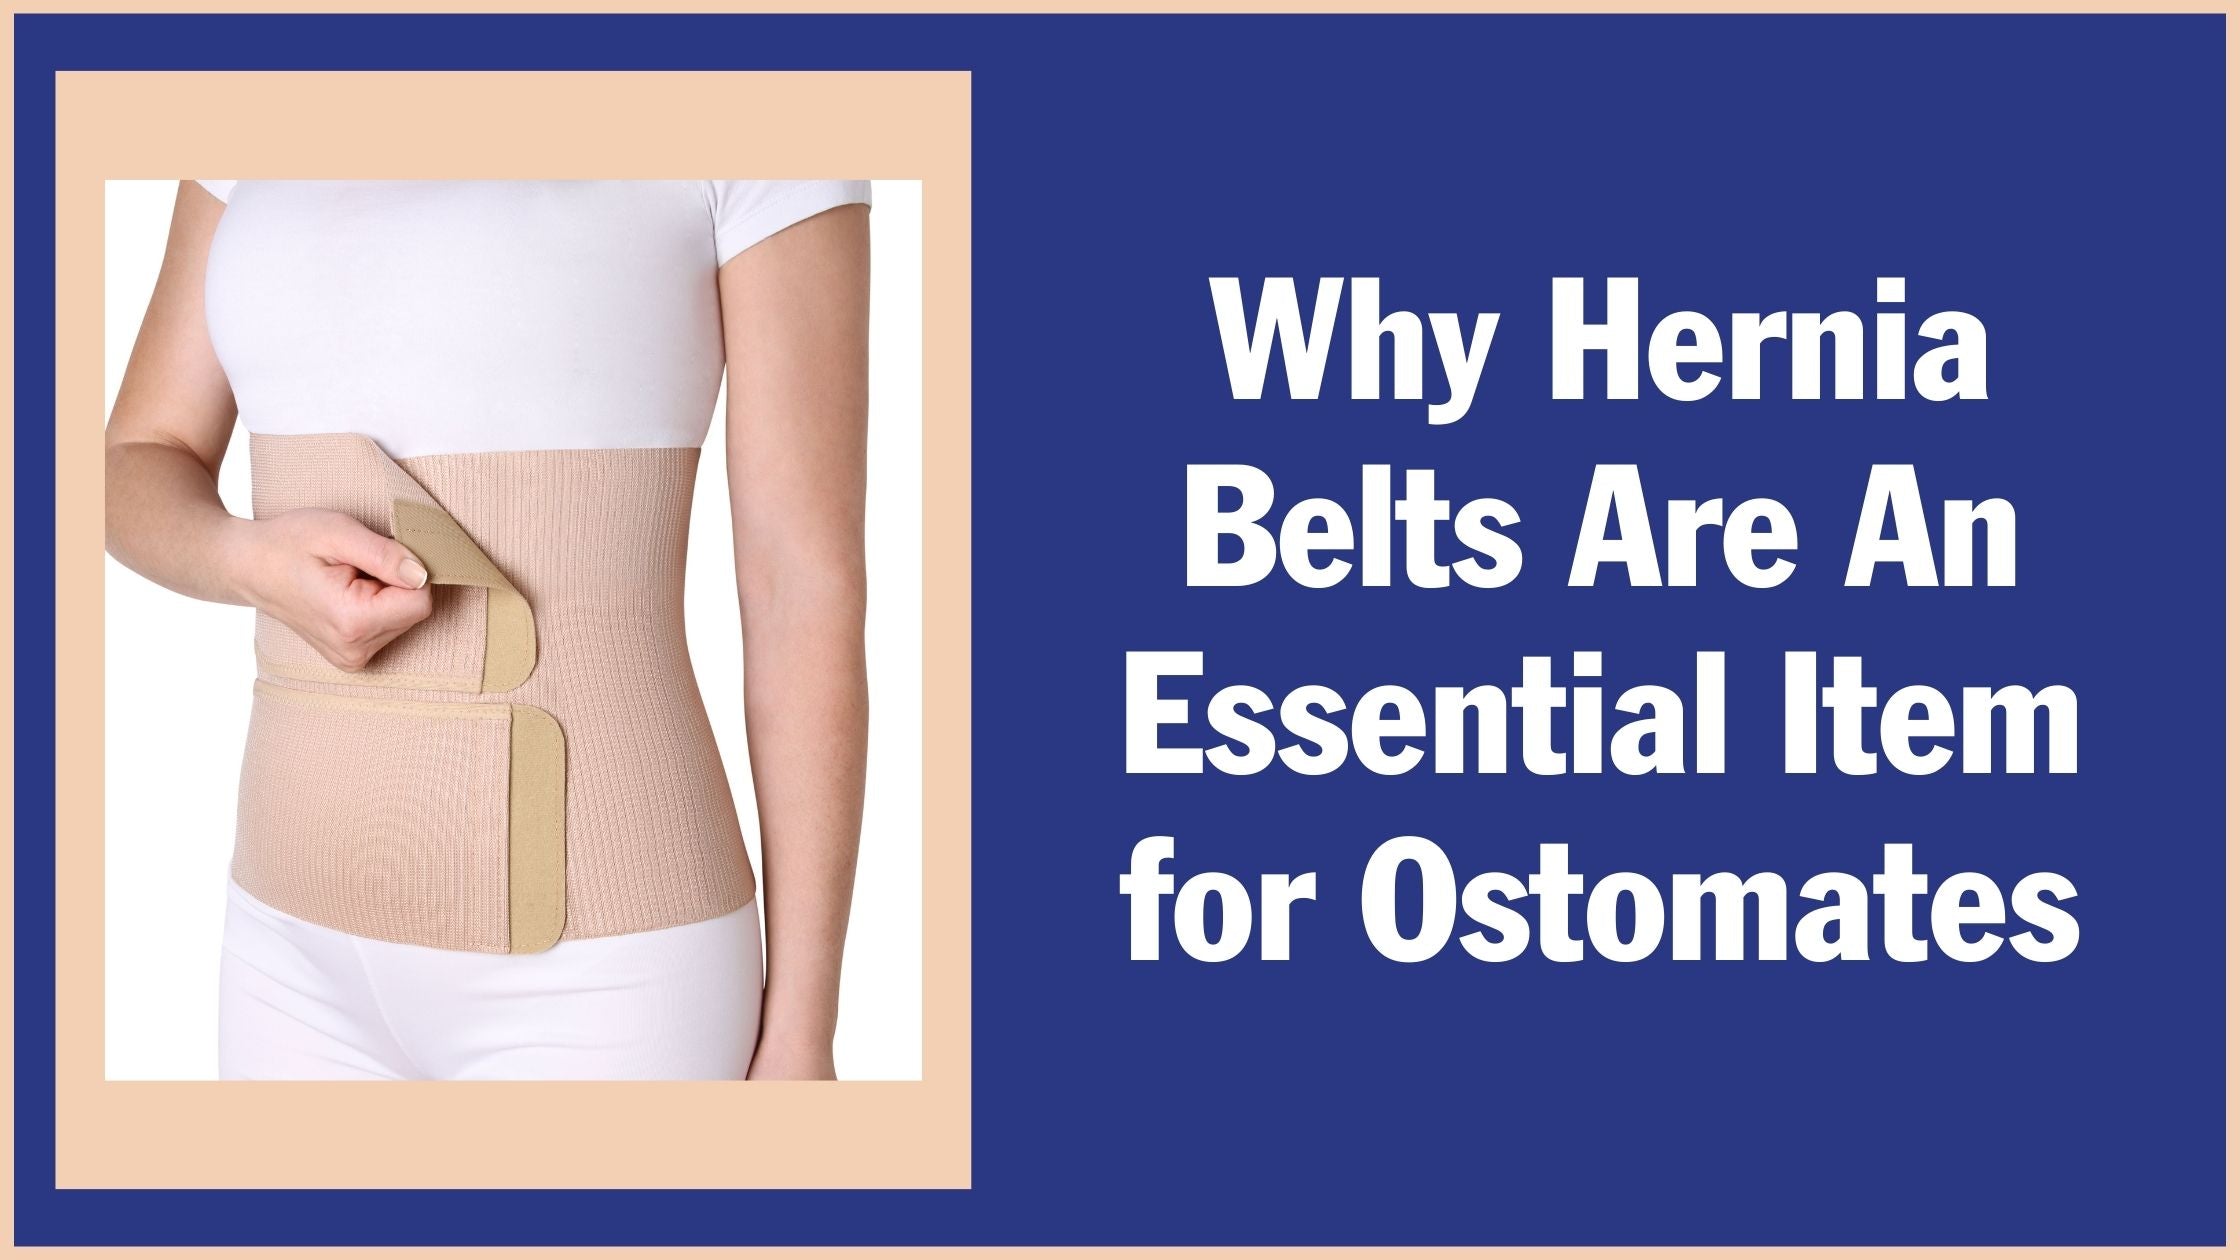 Ostomy Belts